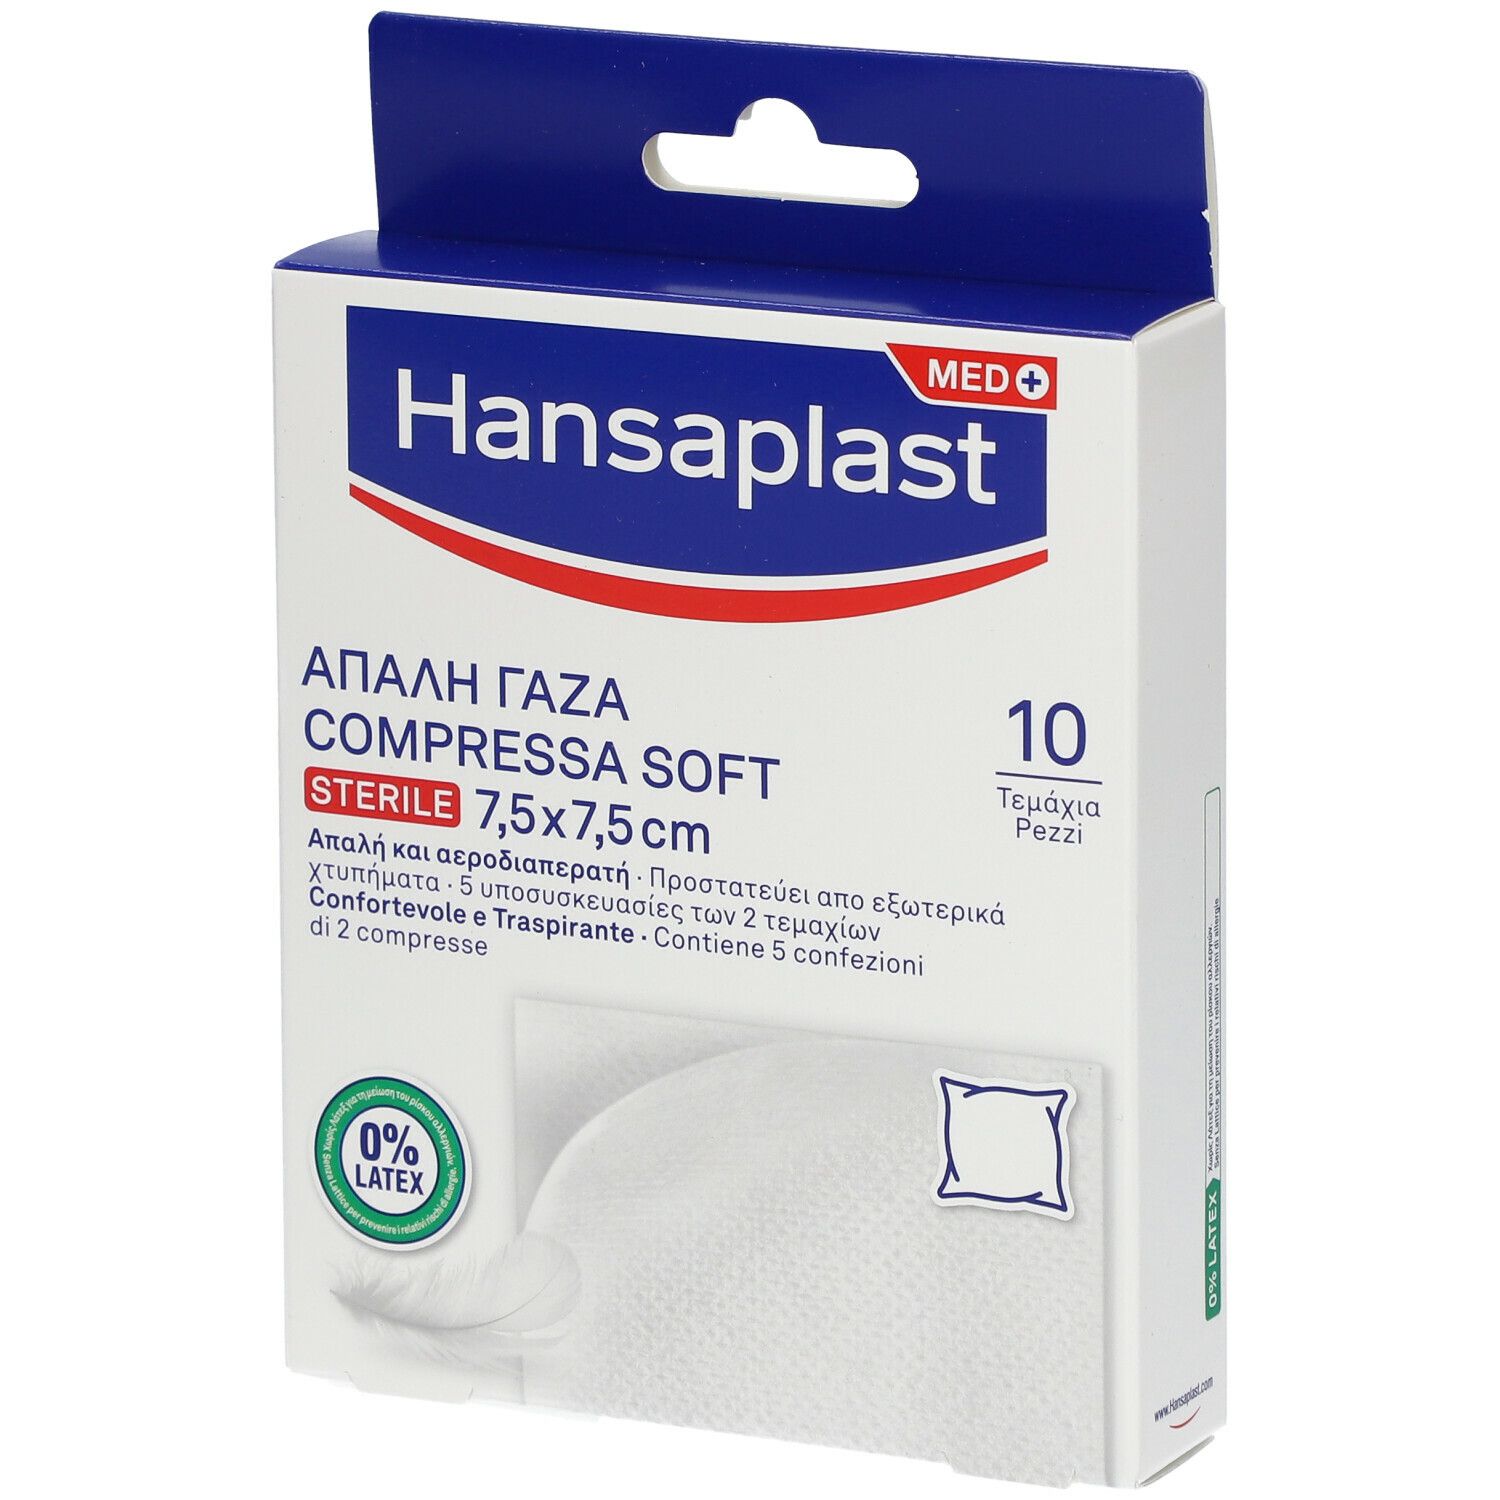 Hansaplast Compressa Soft (7,5 x 7,5cm)